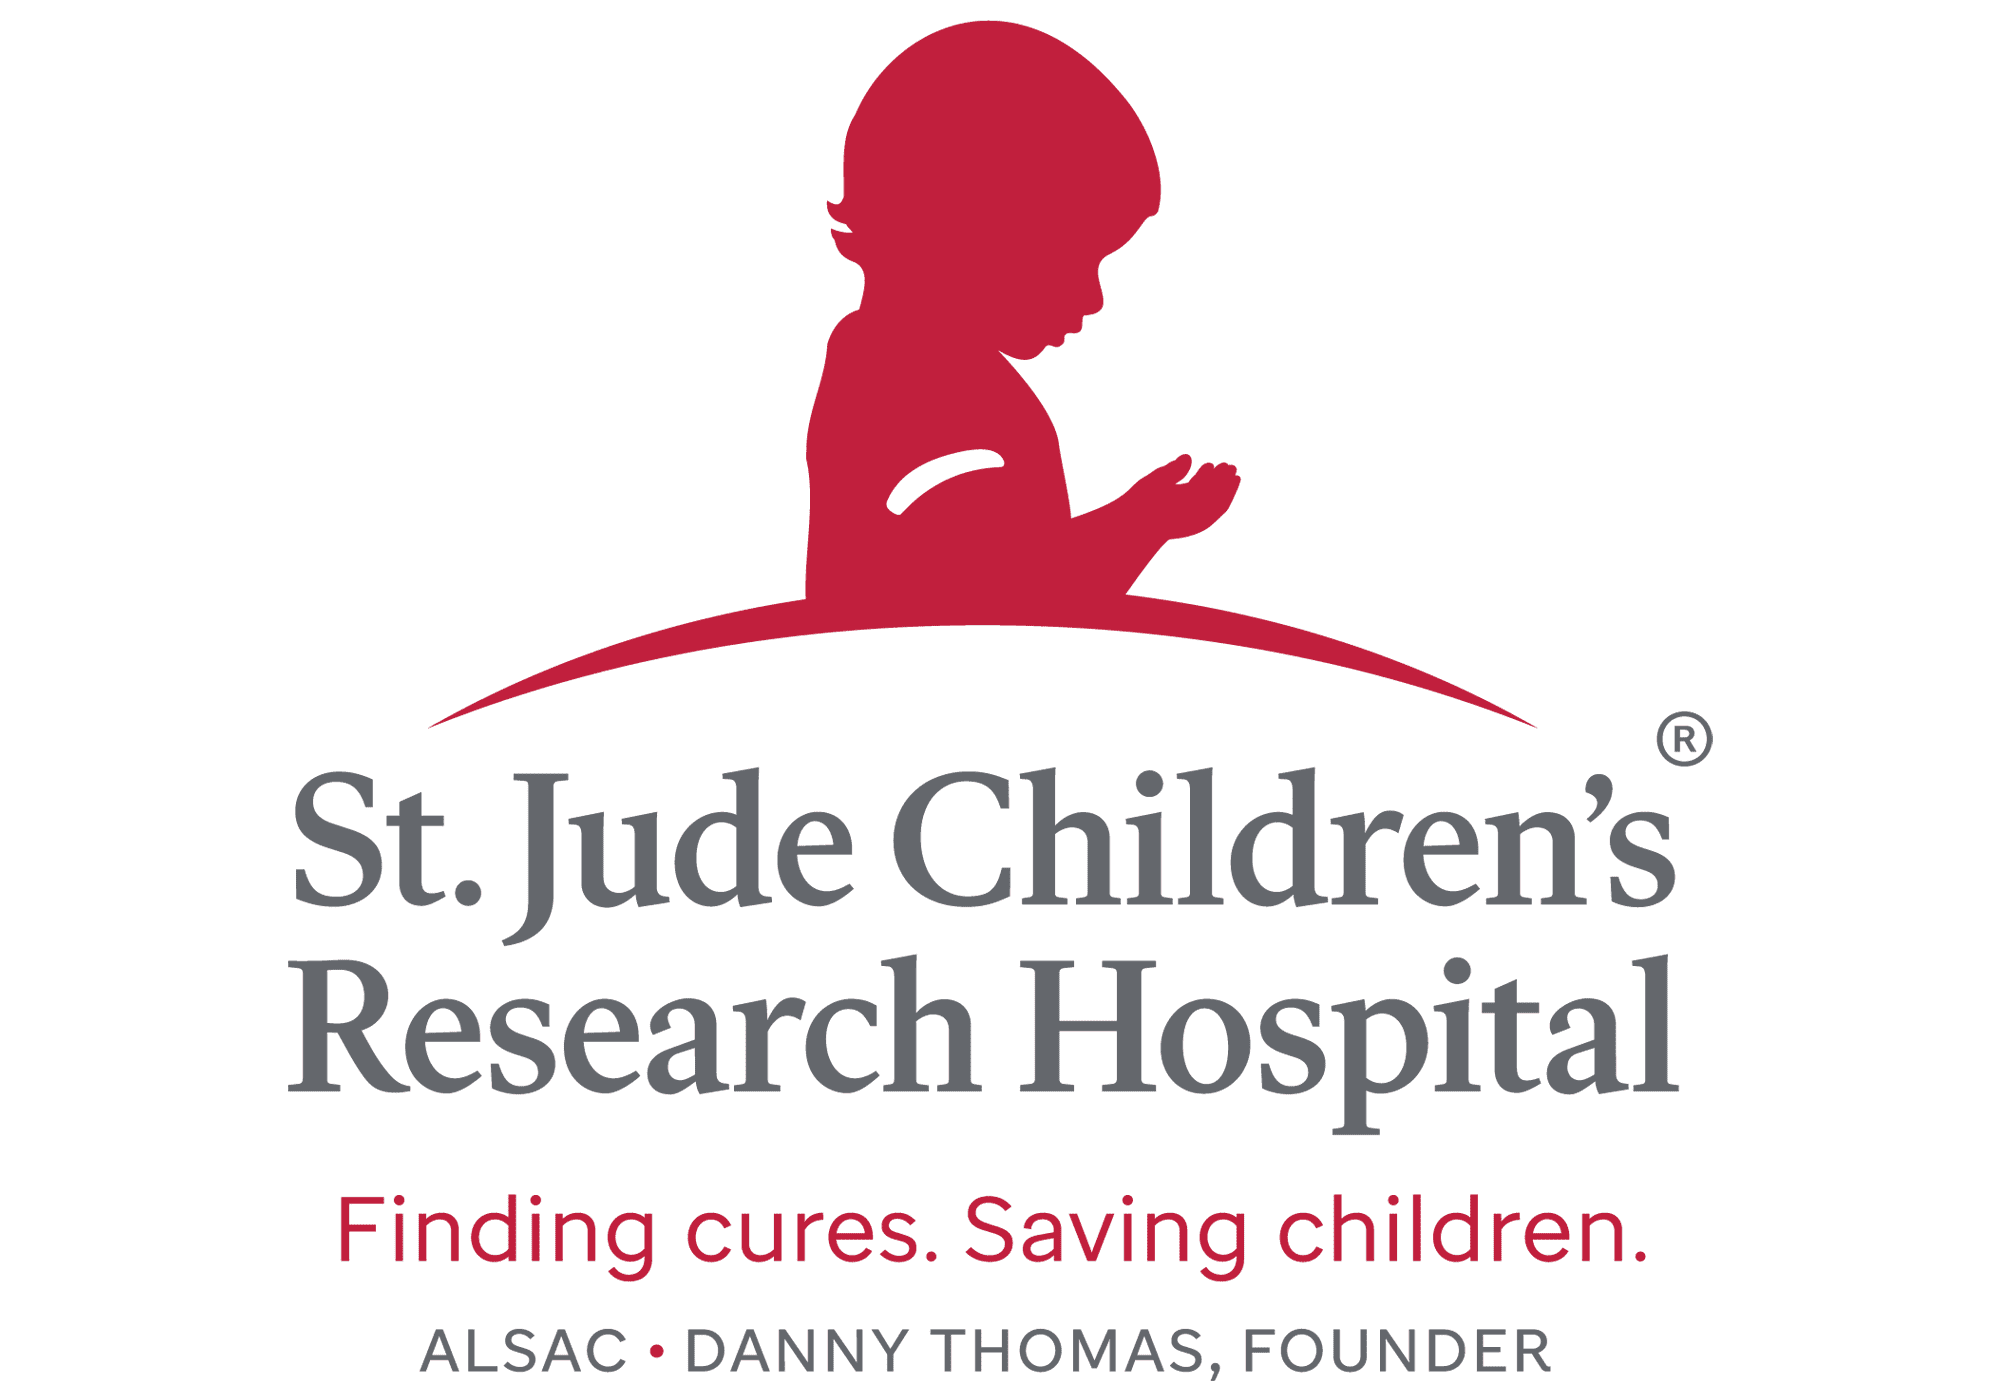 St. Jude logo